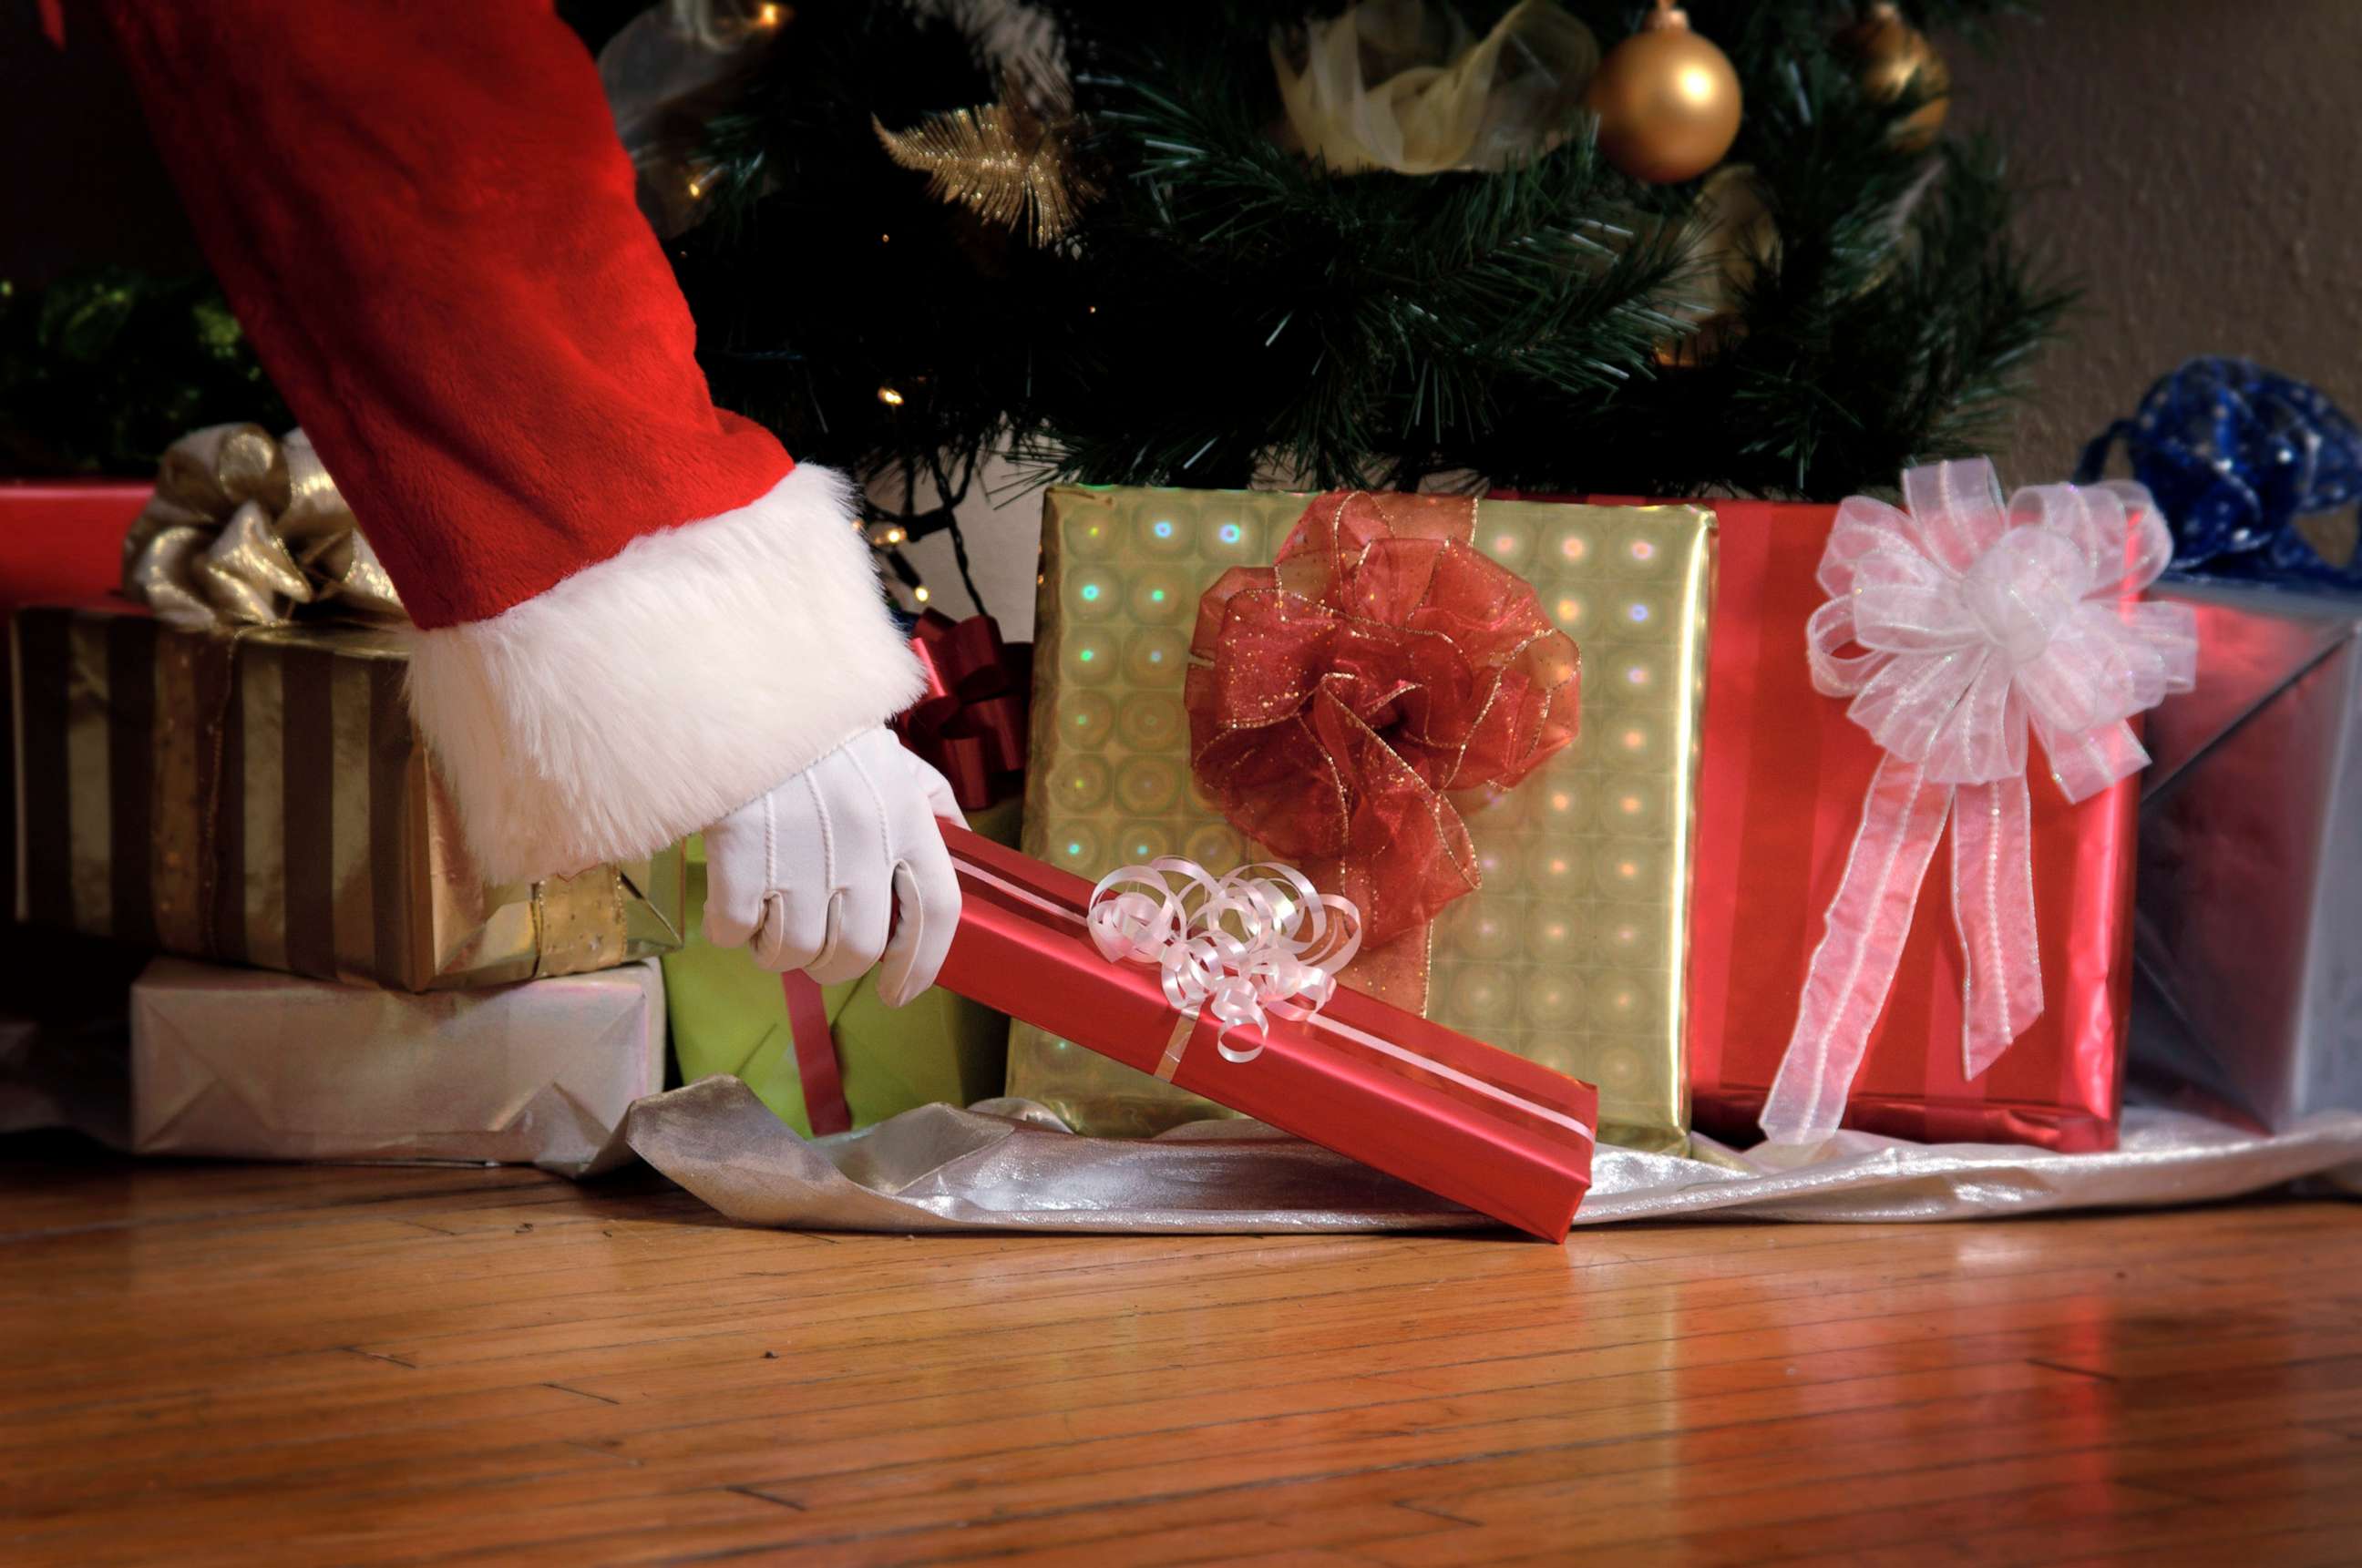 PHOTO: Santa puts a gift under a Christmas tree.